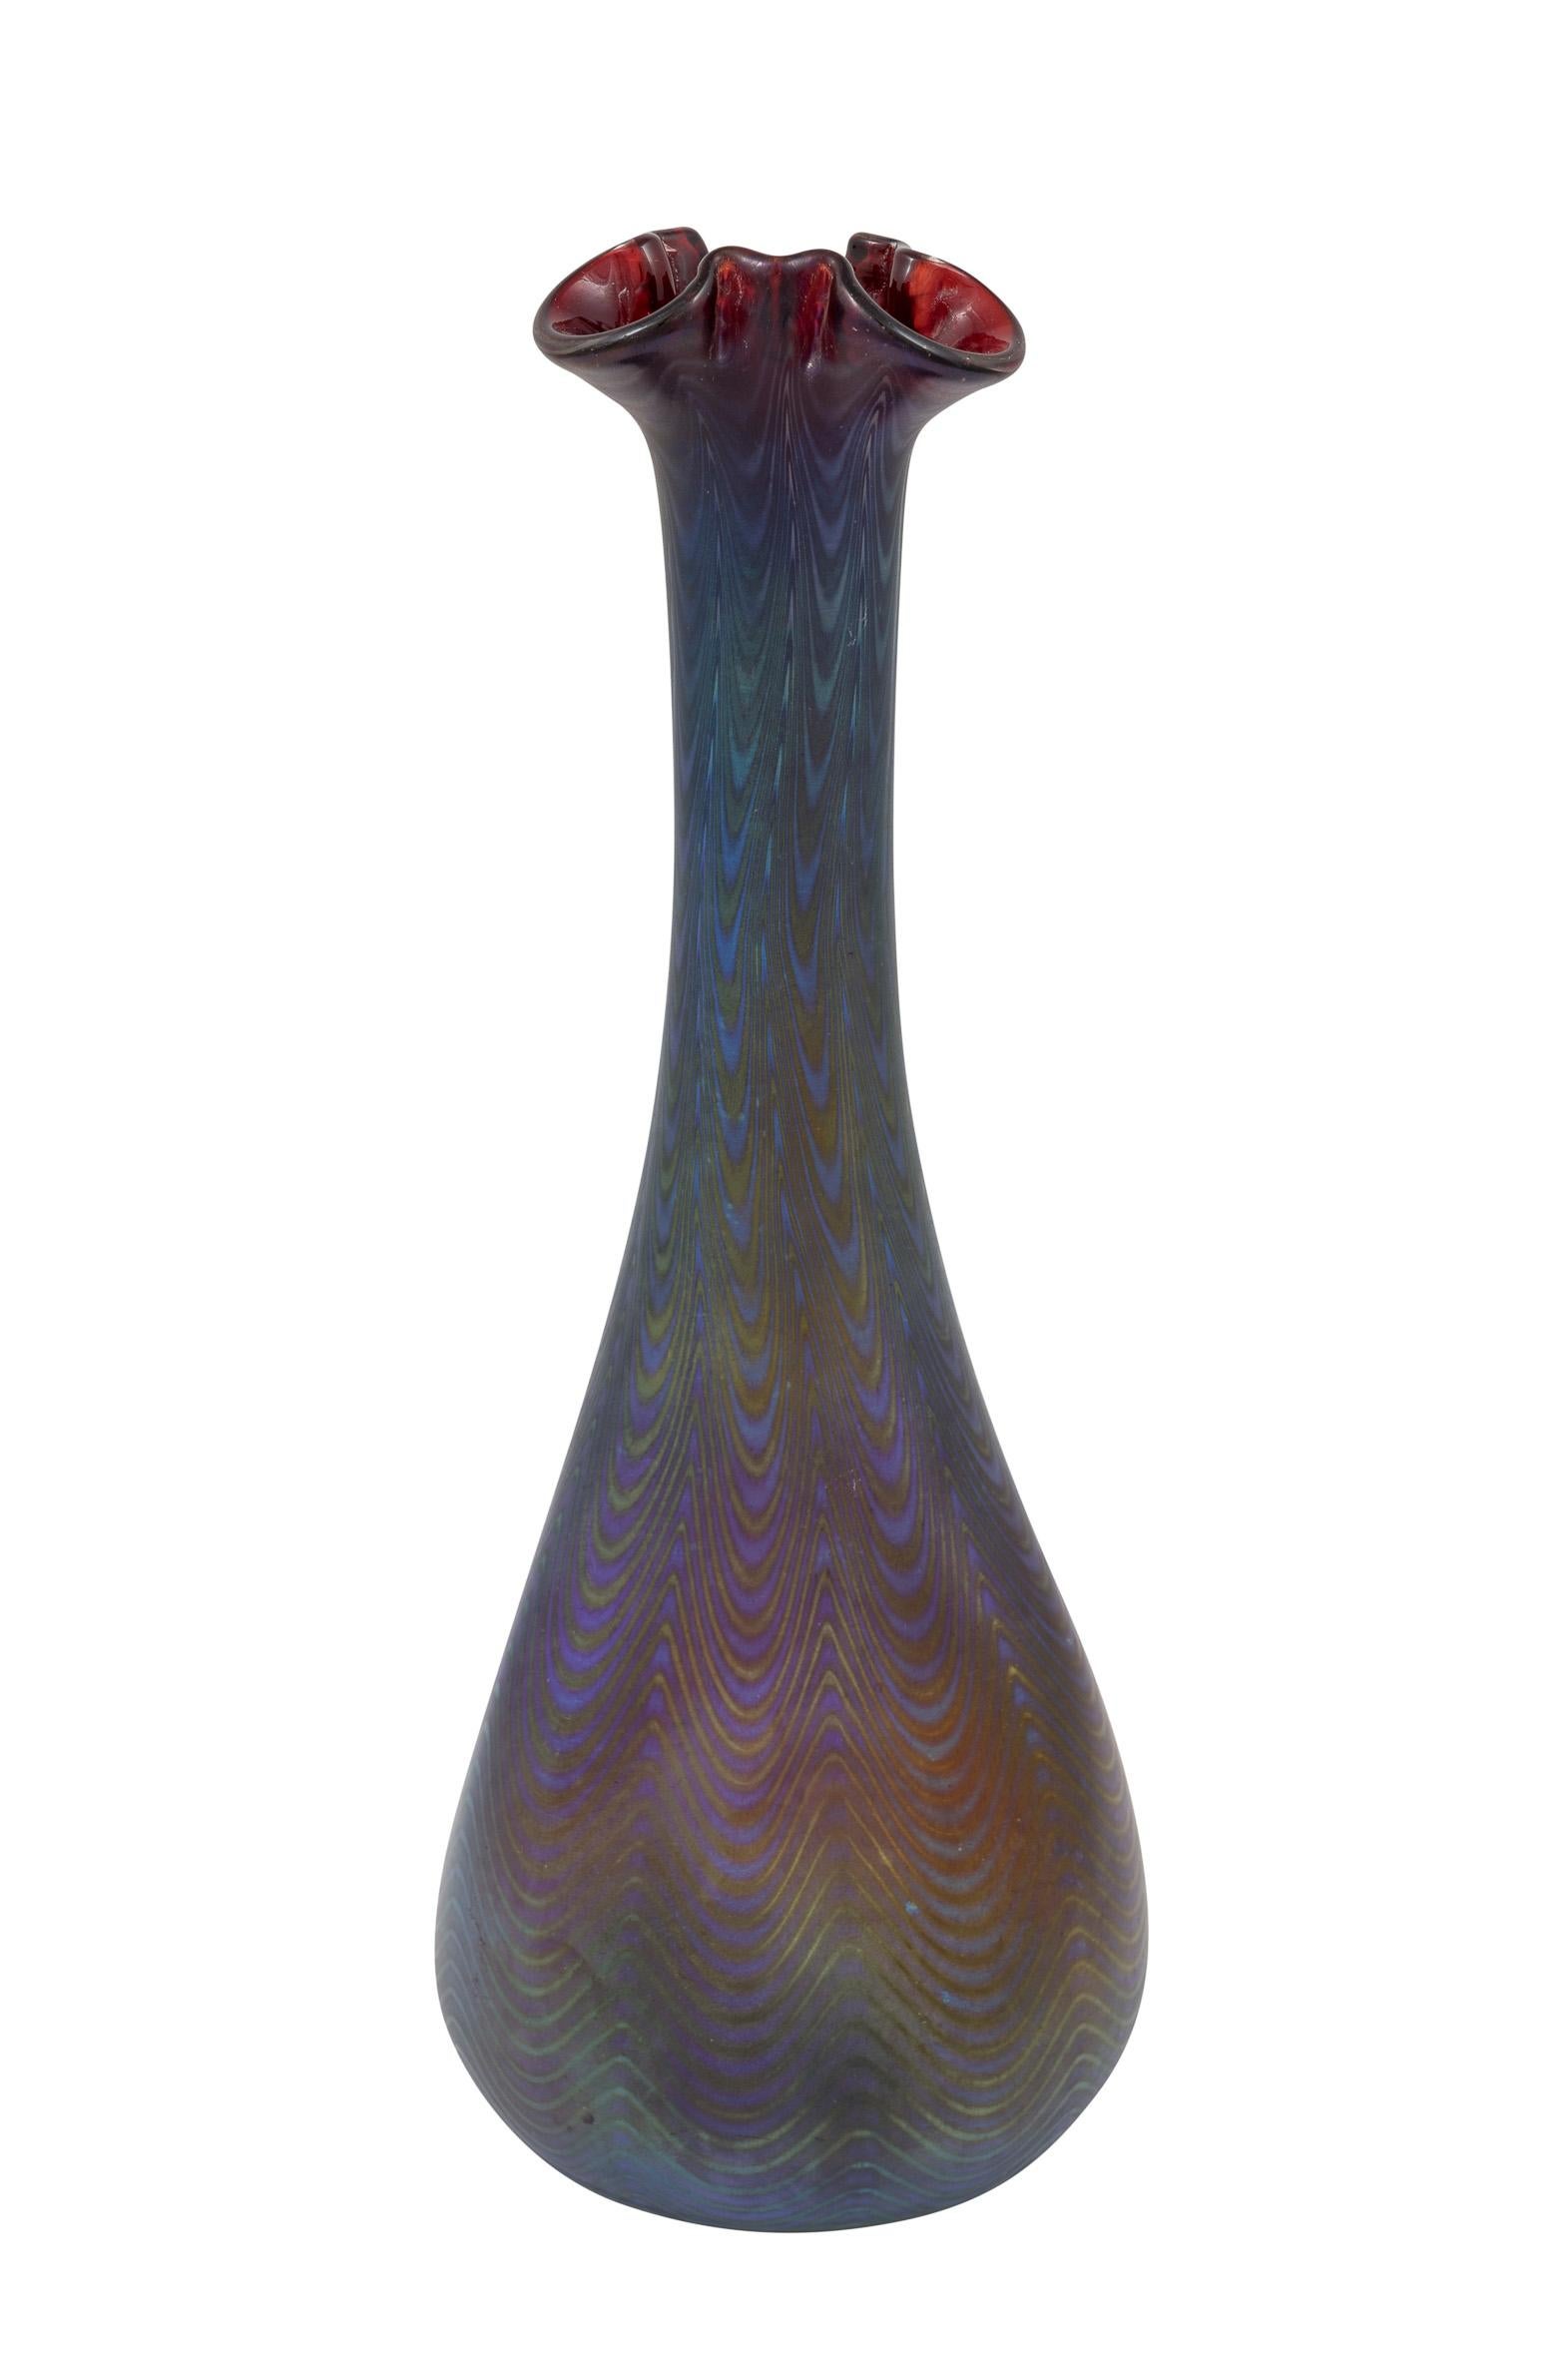 Glass vase, manufactured by Johann Loetz Witwe, Rubin 6893 decoration, PN 7468, ca. 1900, Art Nouveau, Jugendstil, Art Deco, art glass, iridescent glass, blue, red

Technique: Glass, mould-blown and freeform, reduced and iridescent

Bib.: E. Ploil,